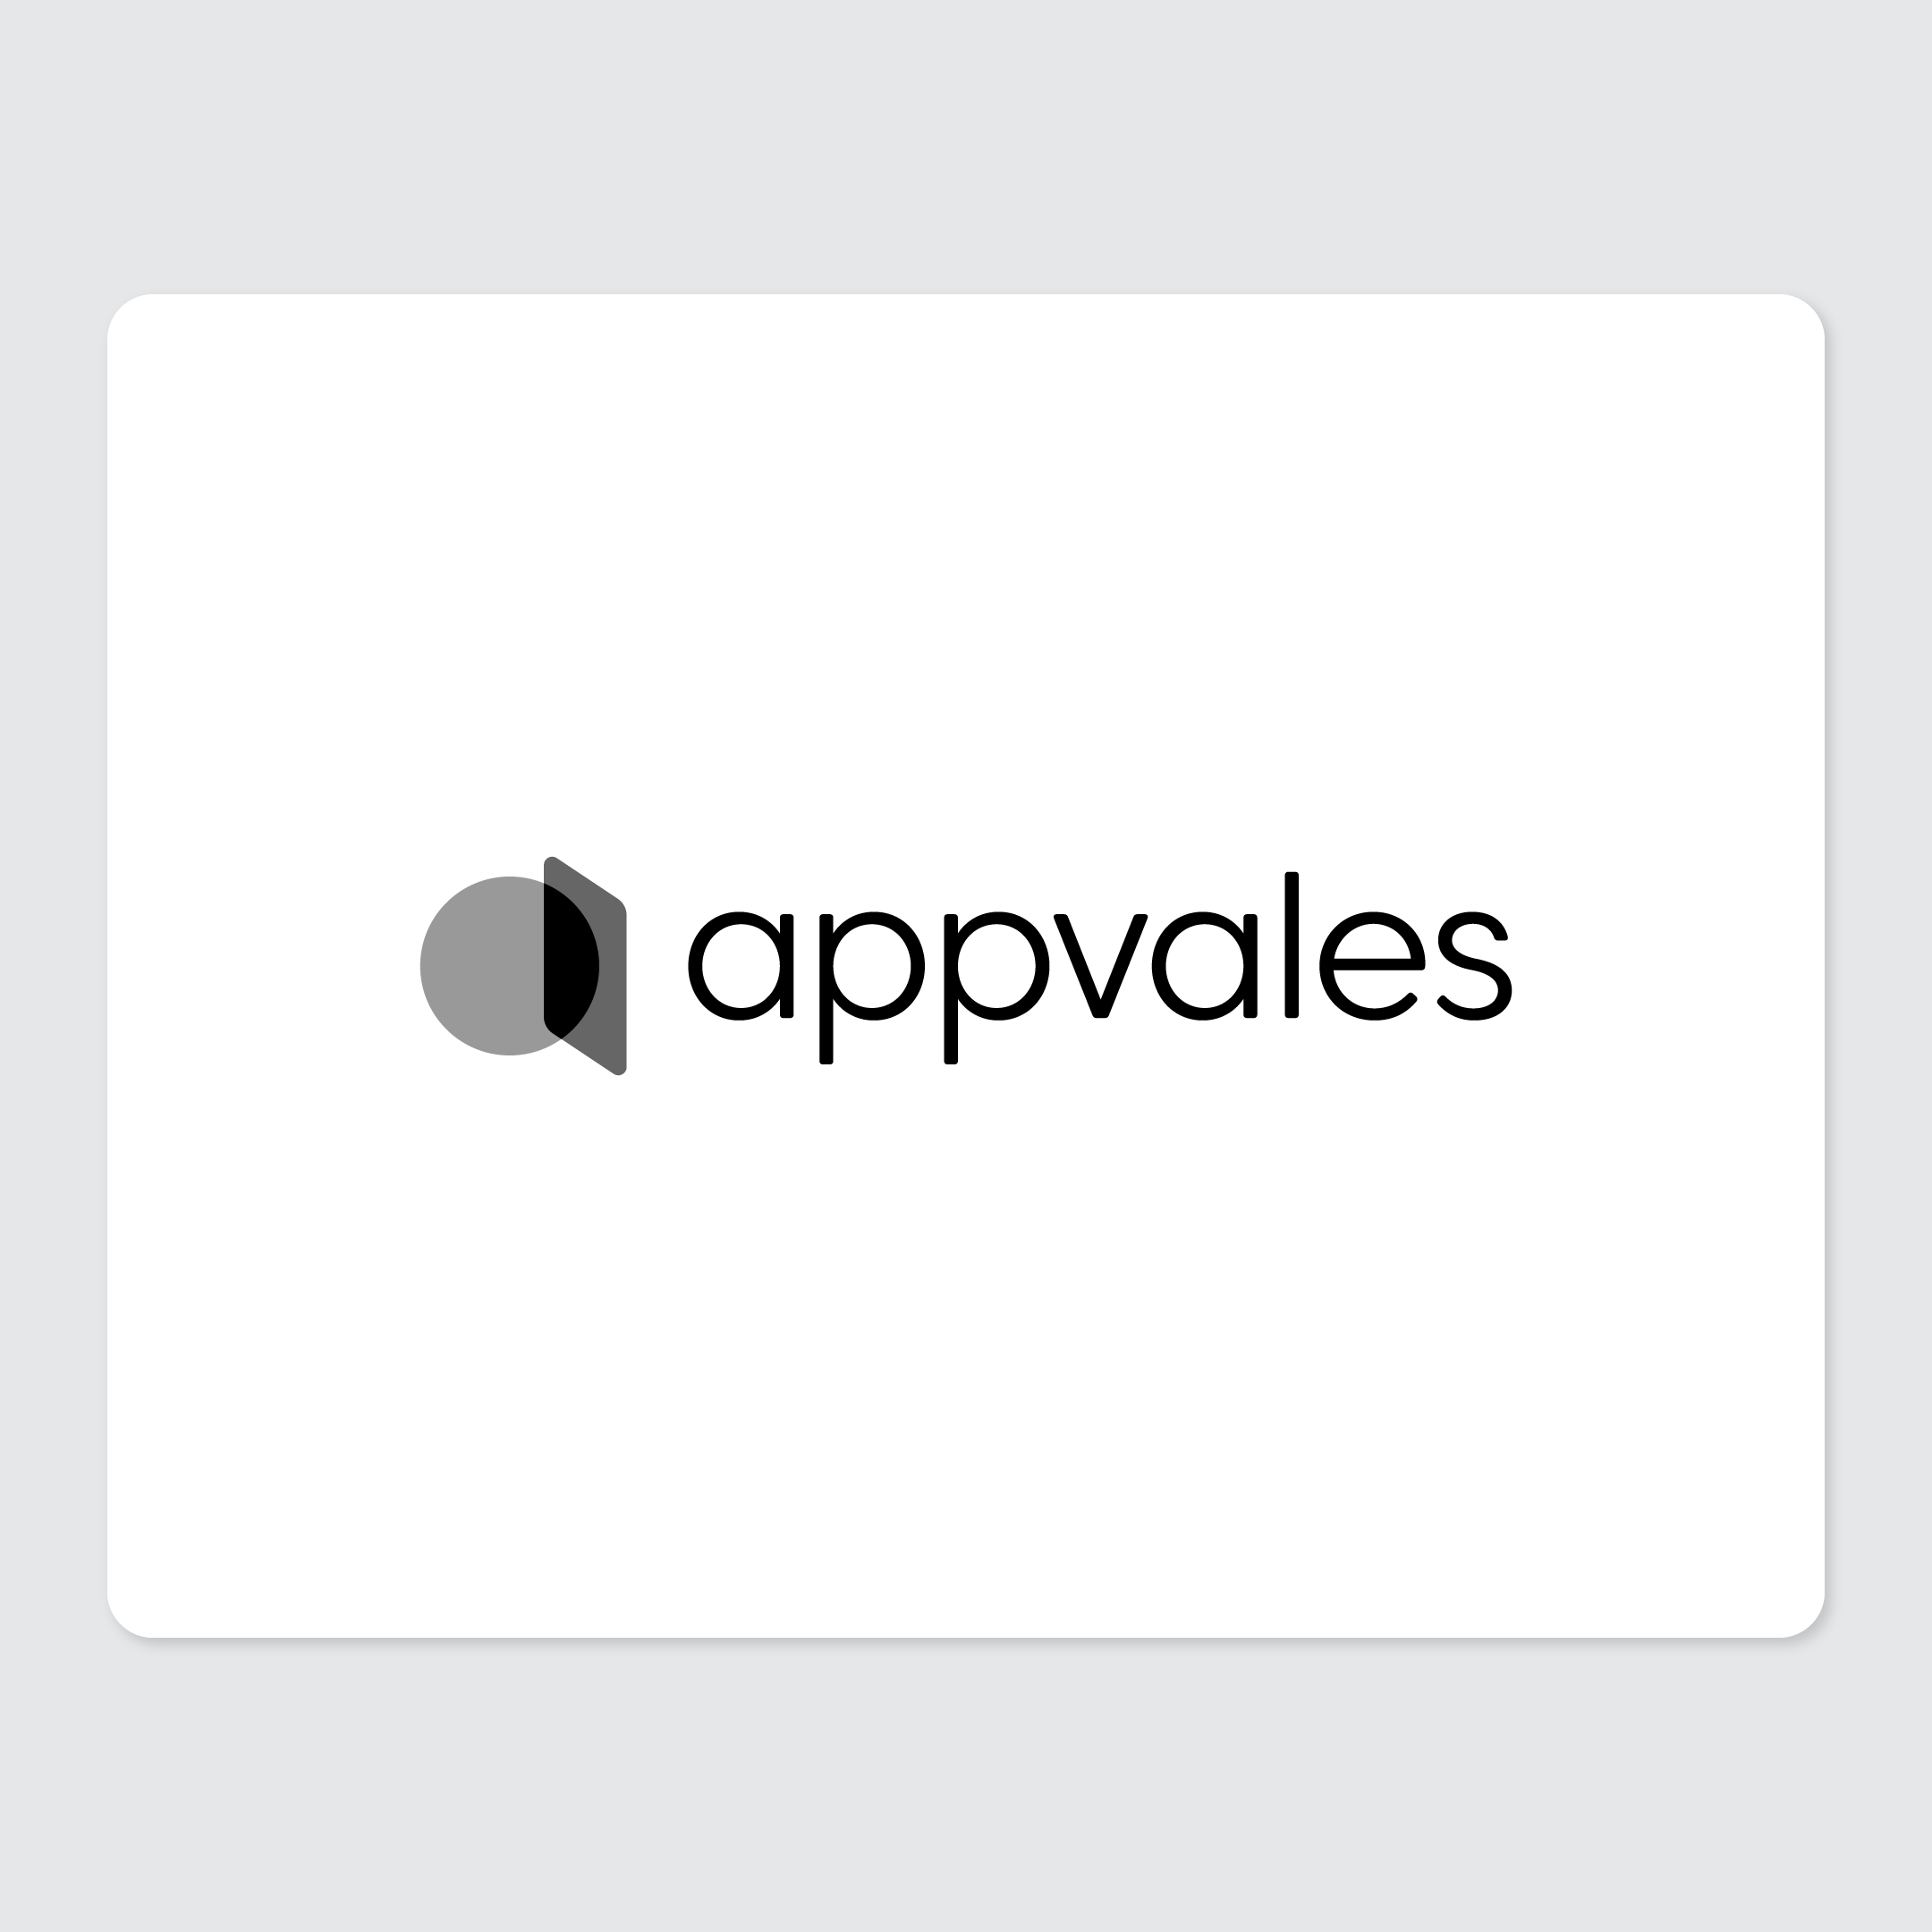 Appvales-black-logo